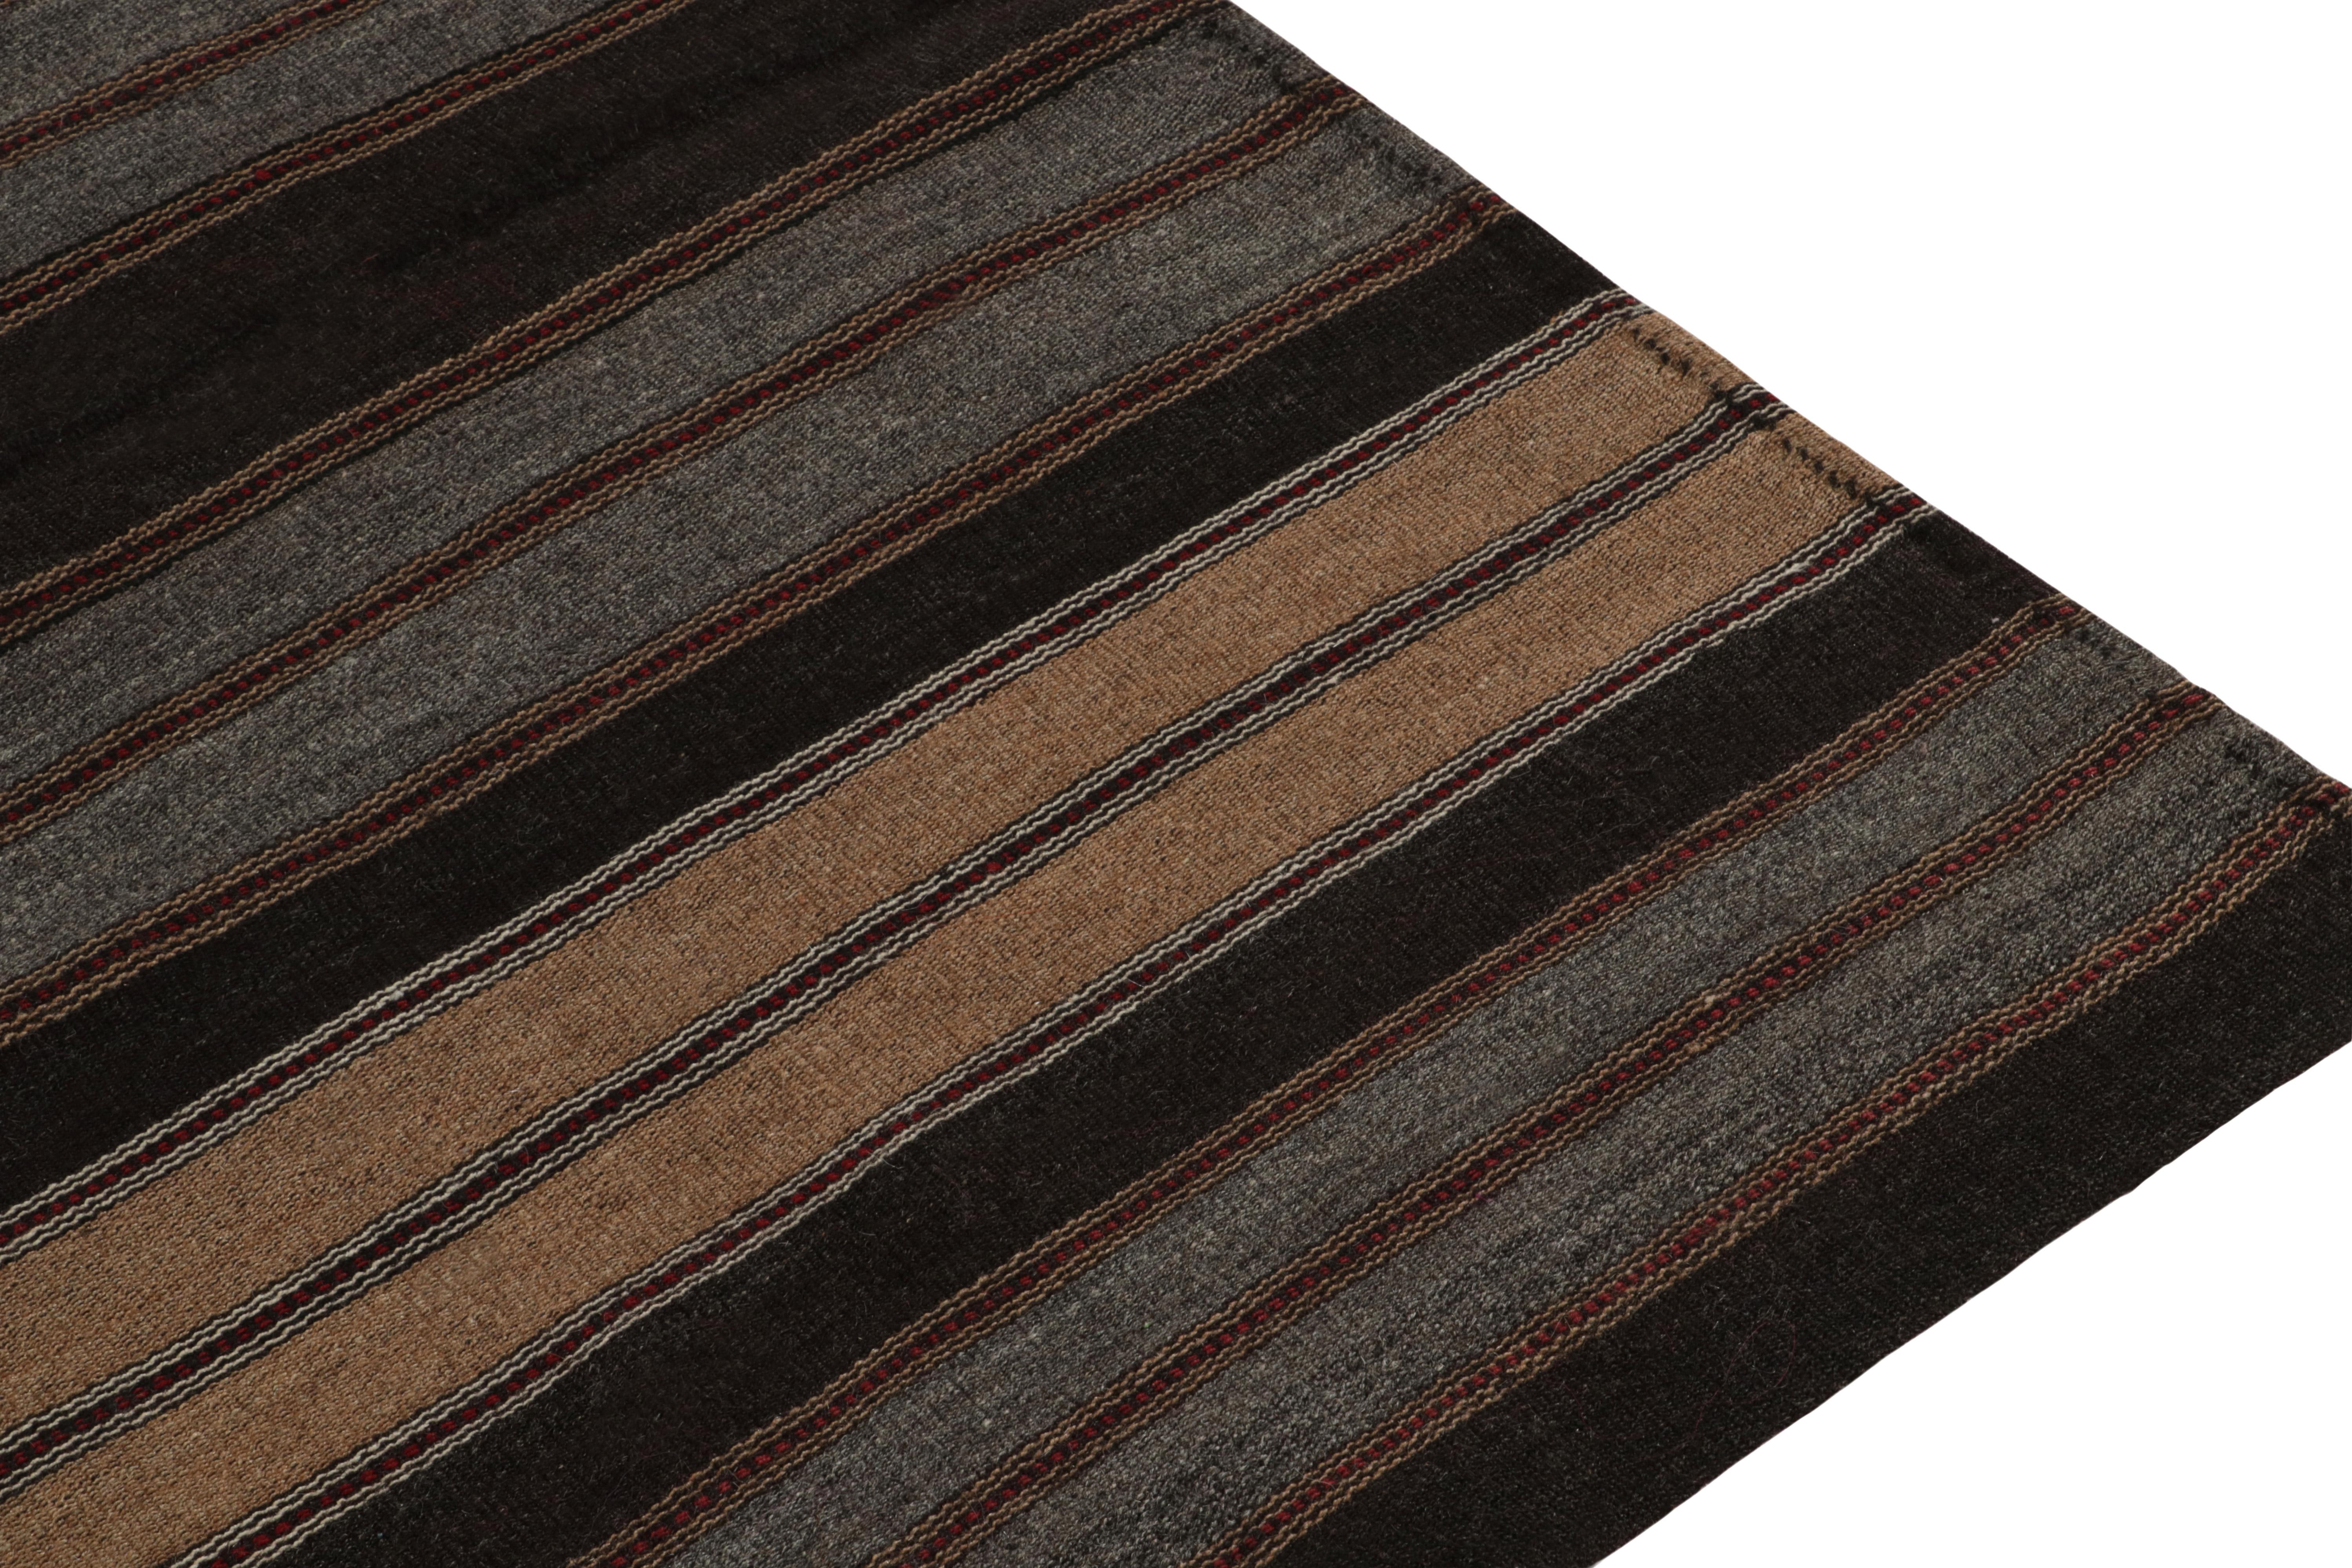 Turkish Vintage Kilim Rug in Brown, Beige and Blue Stripe Patterns by Rug & Kilim For Sale